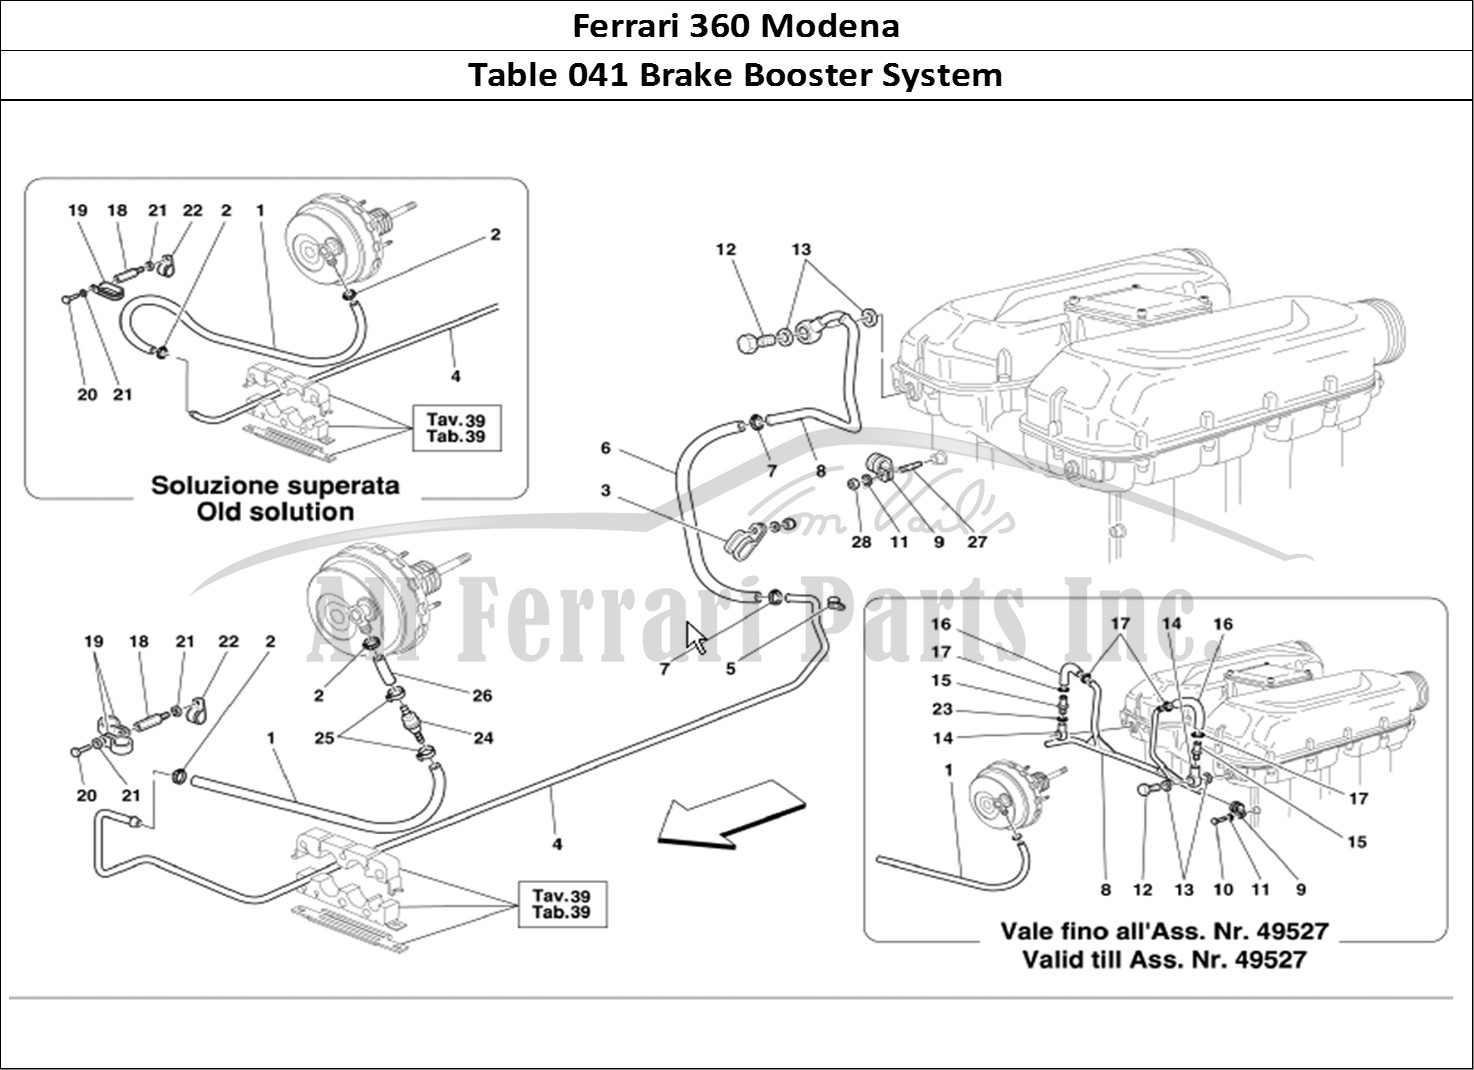 Ferrari Parts Ferrari 360 Modena Page 041 Brake Booster System